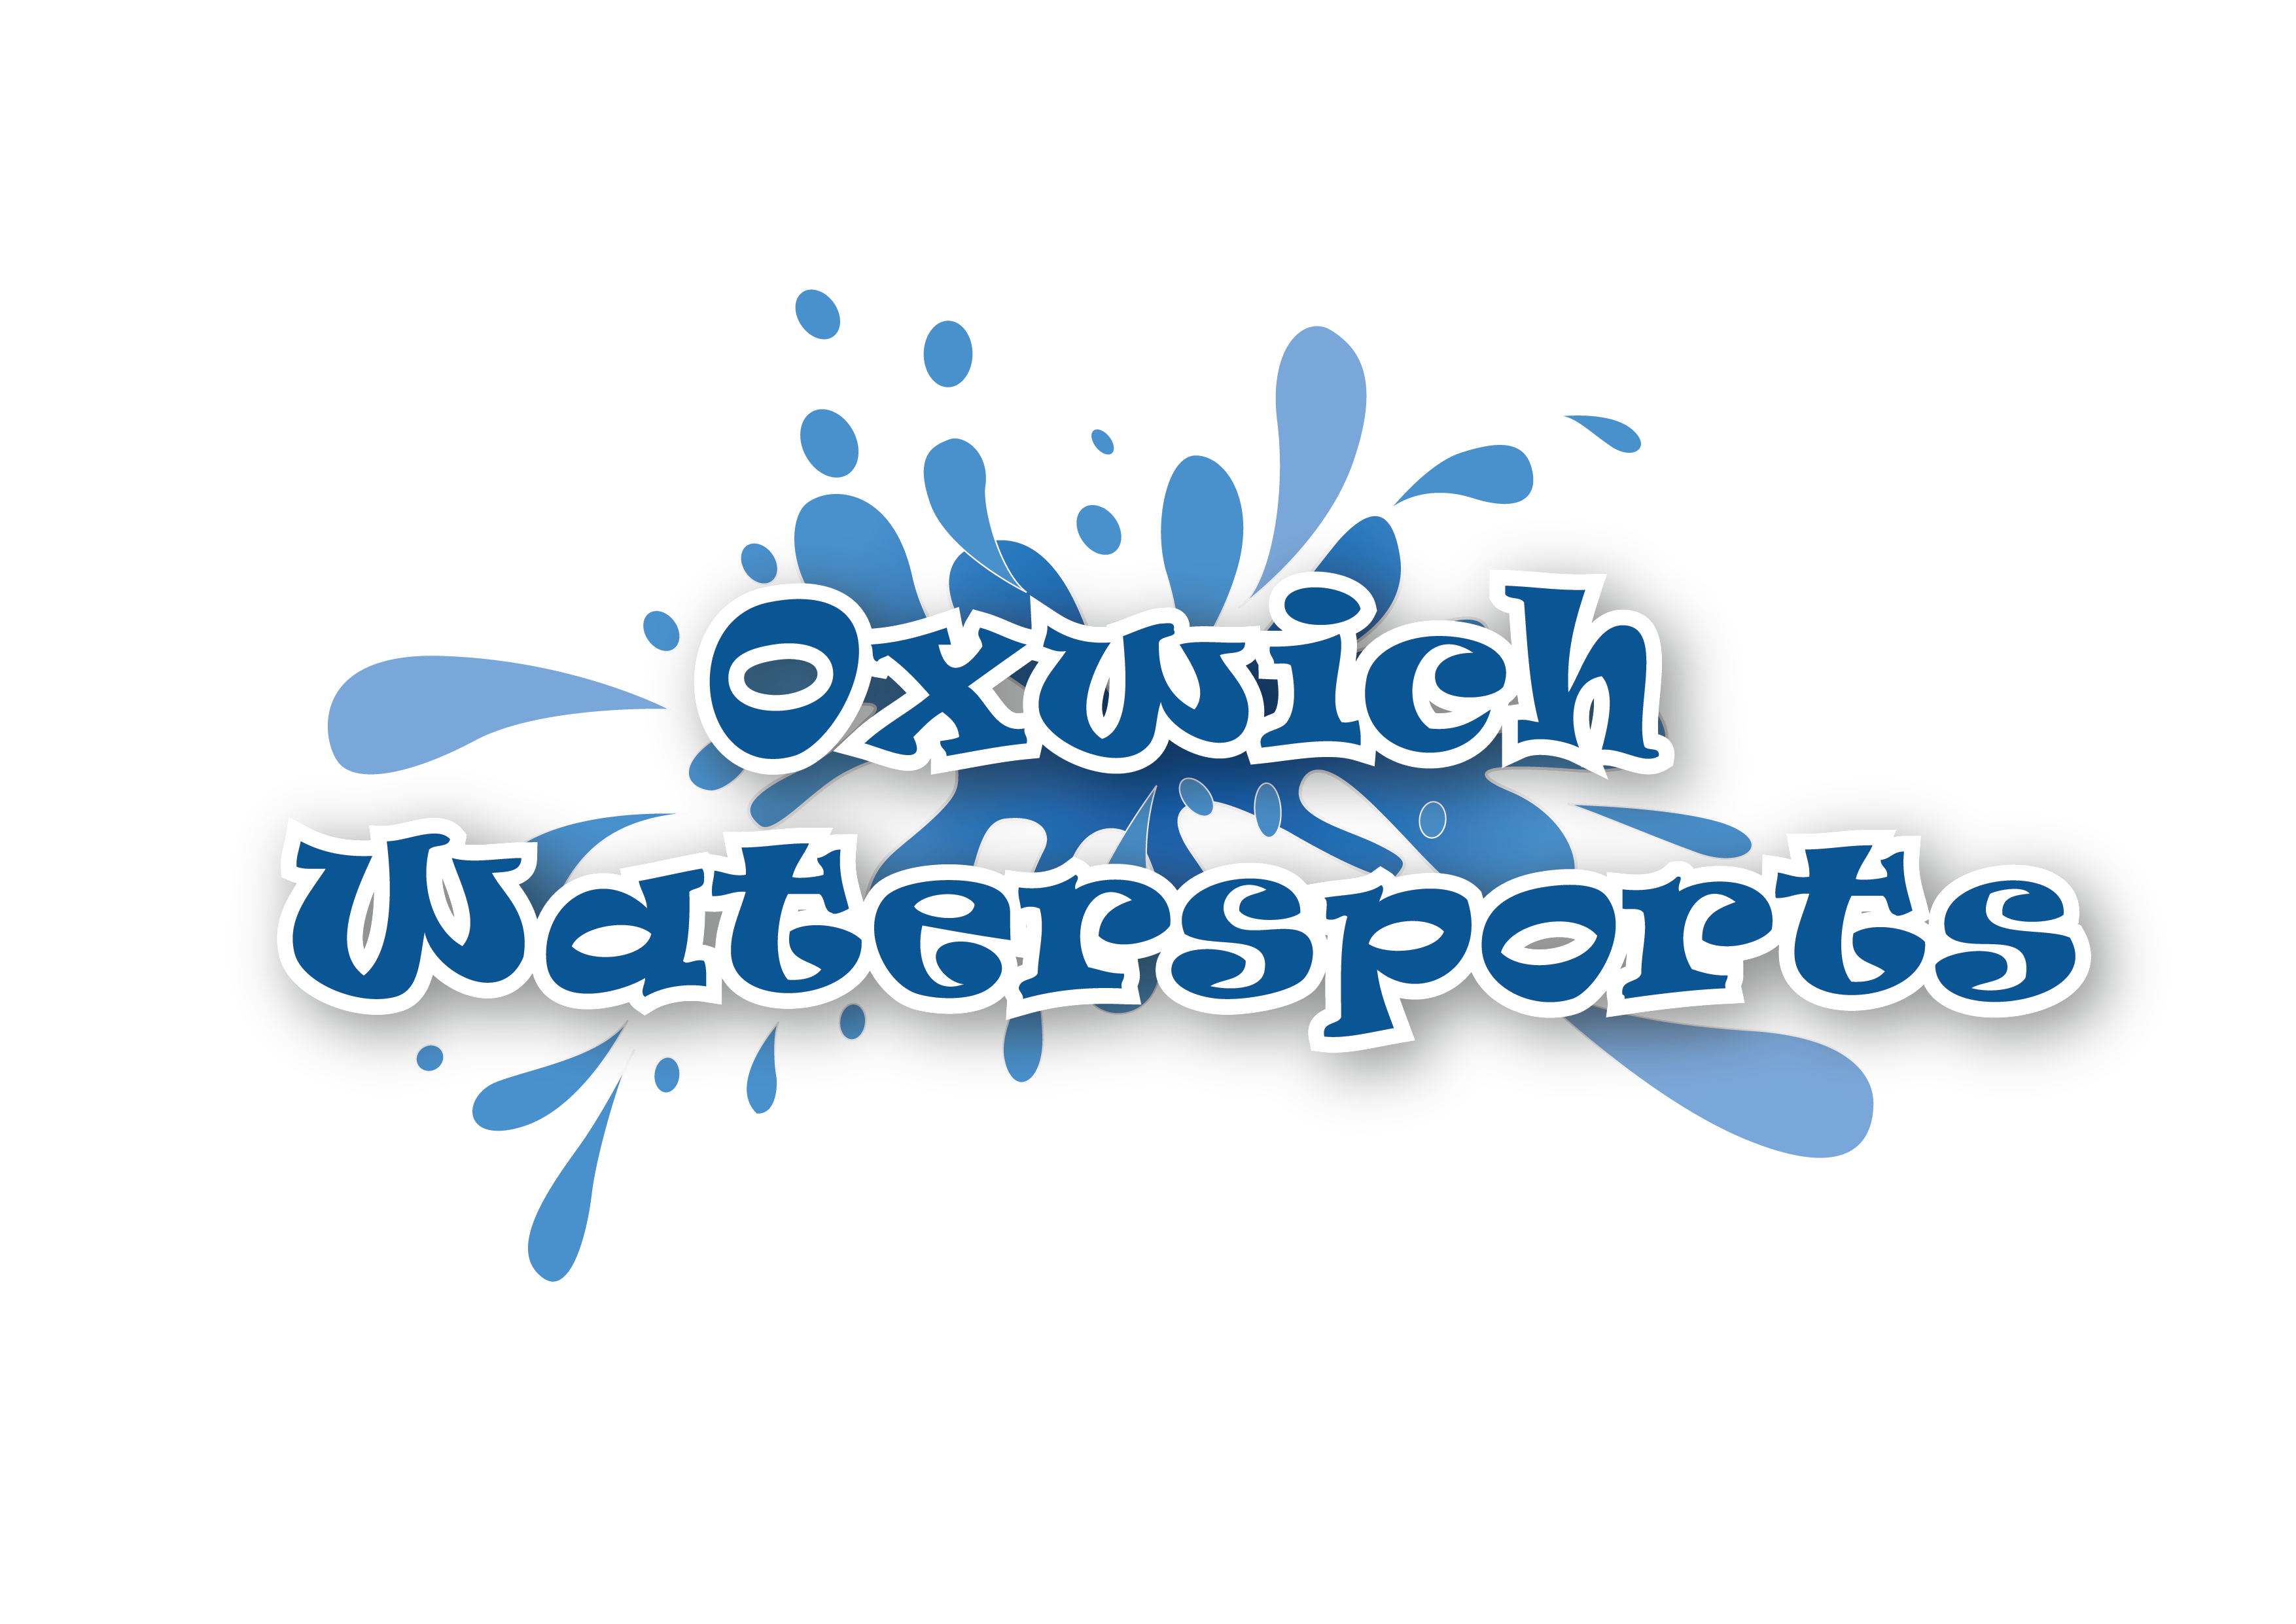 Oxwich Watersports